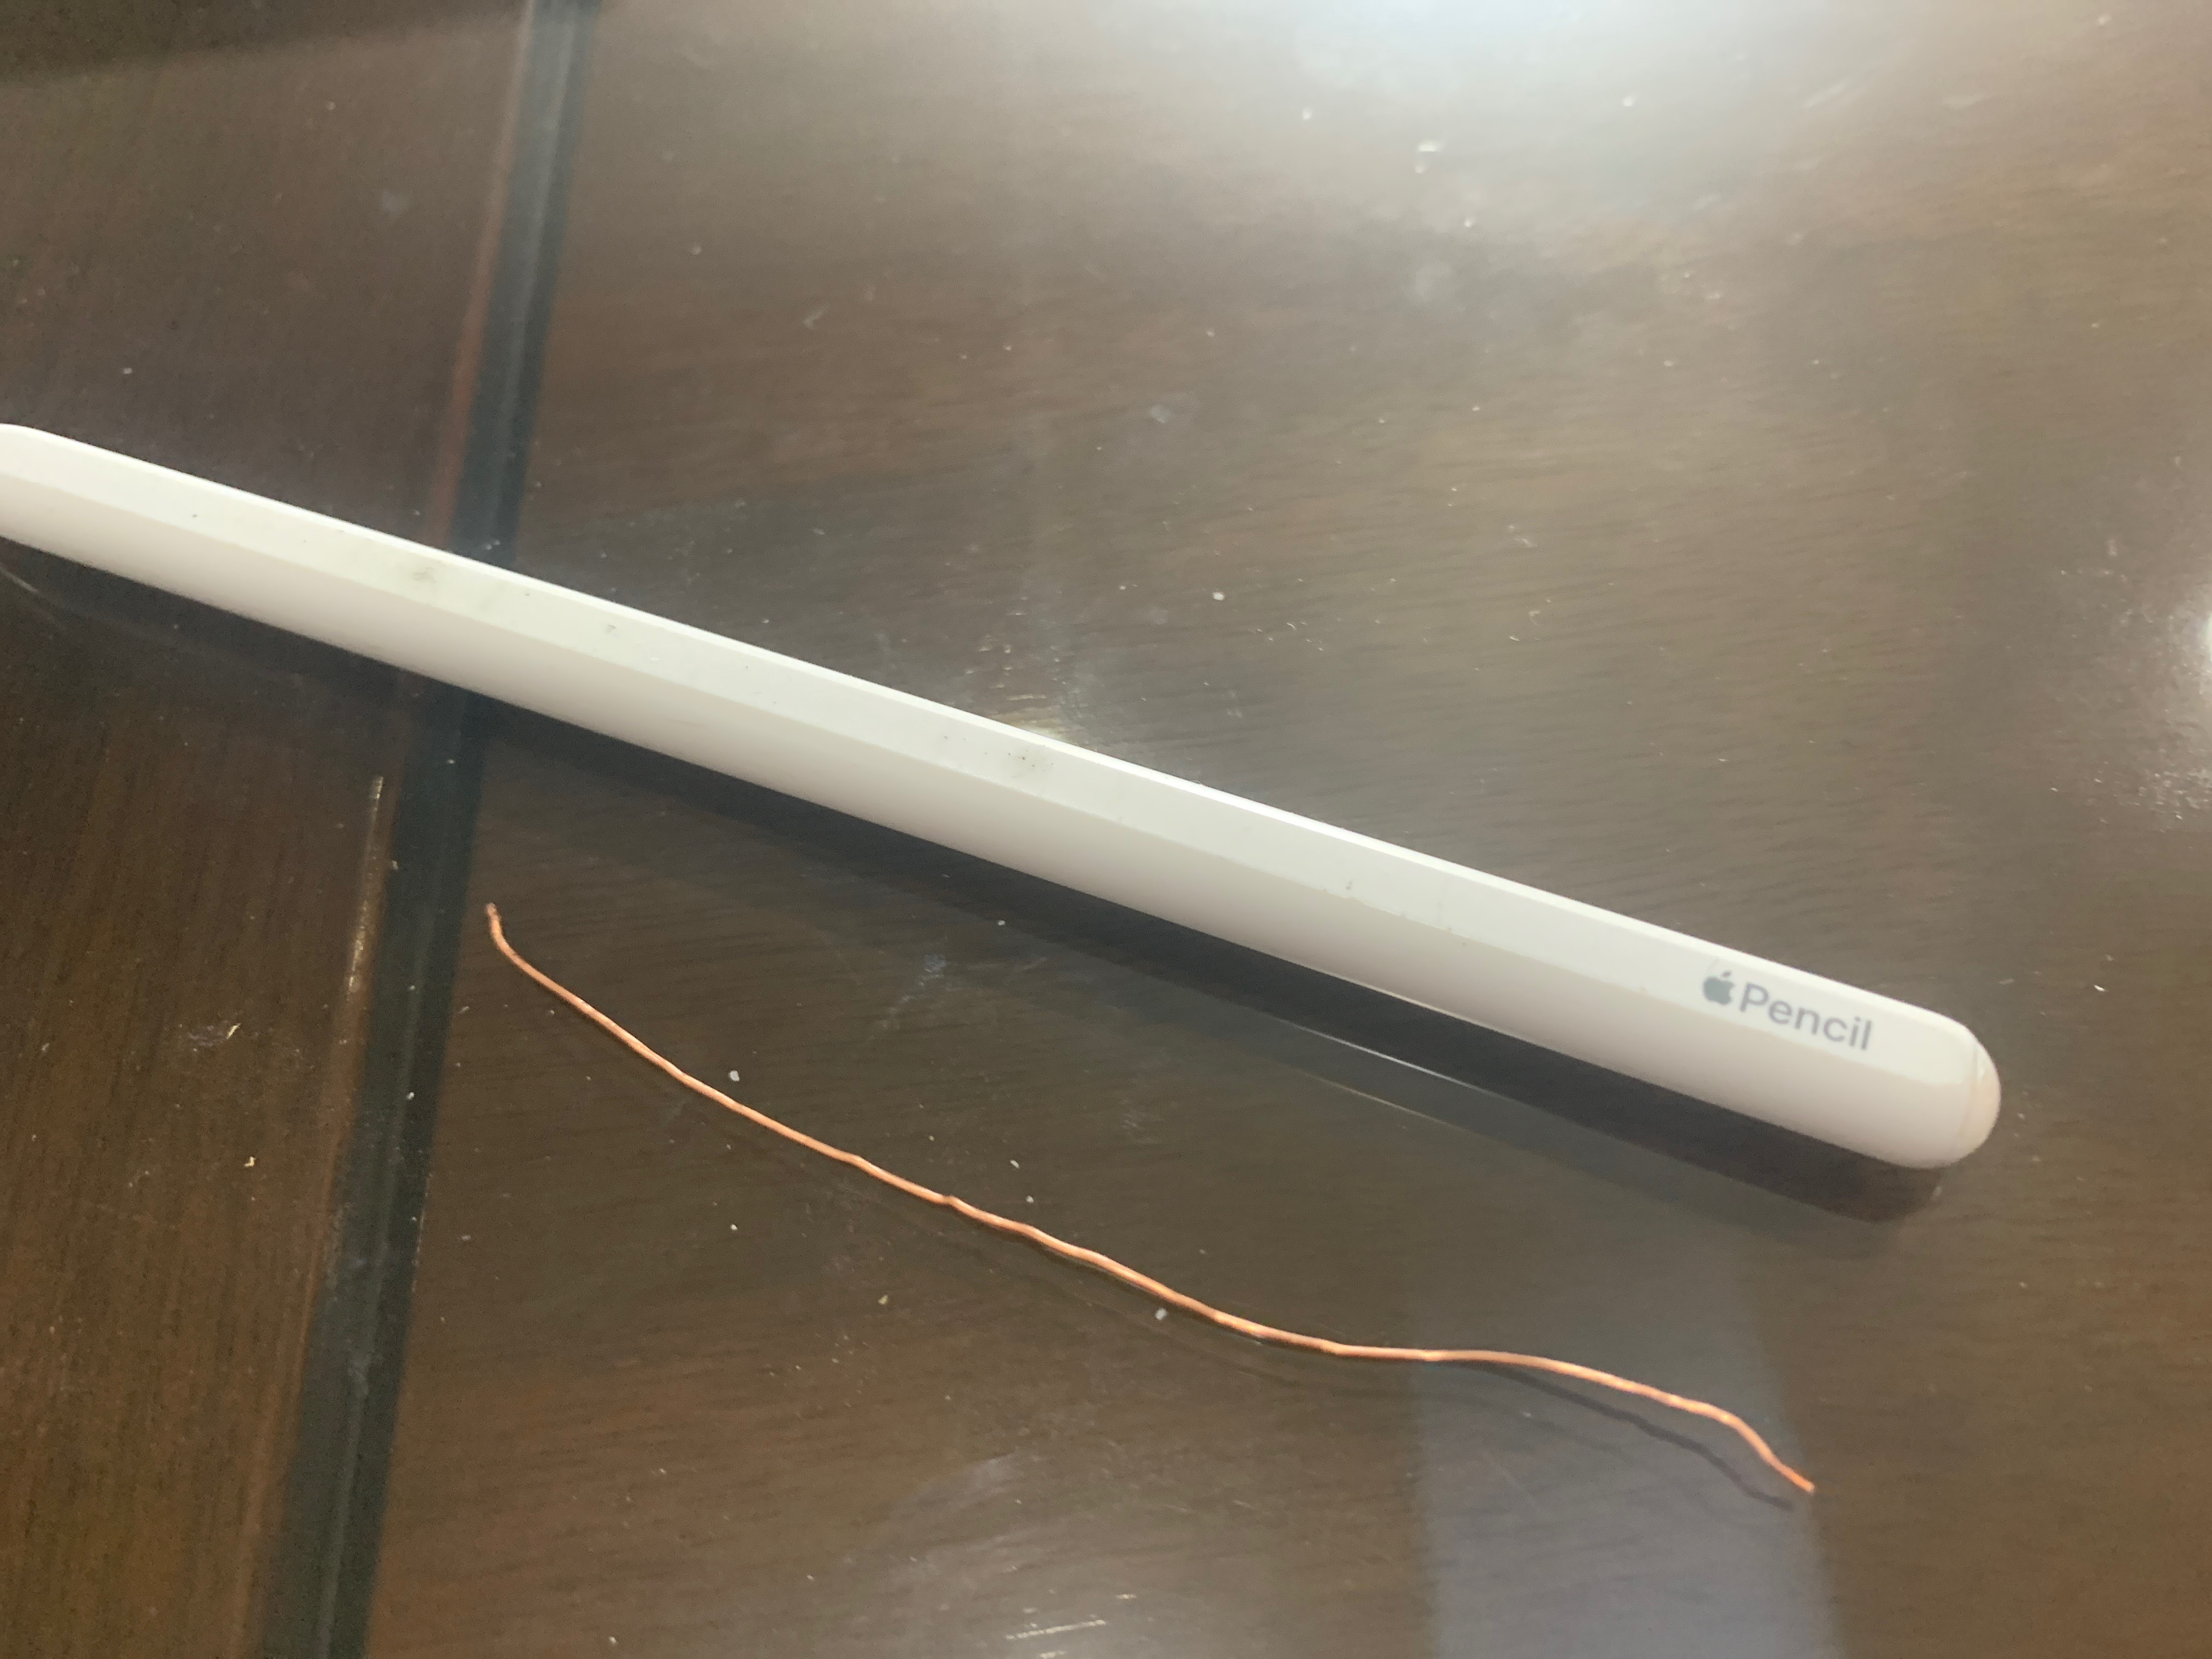 How do you revive a dead Apple Pencil?